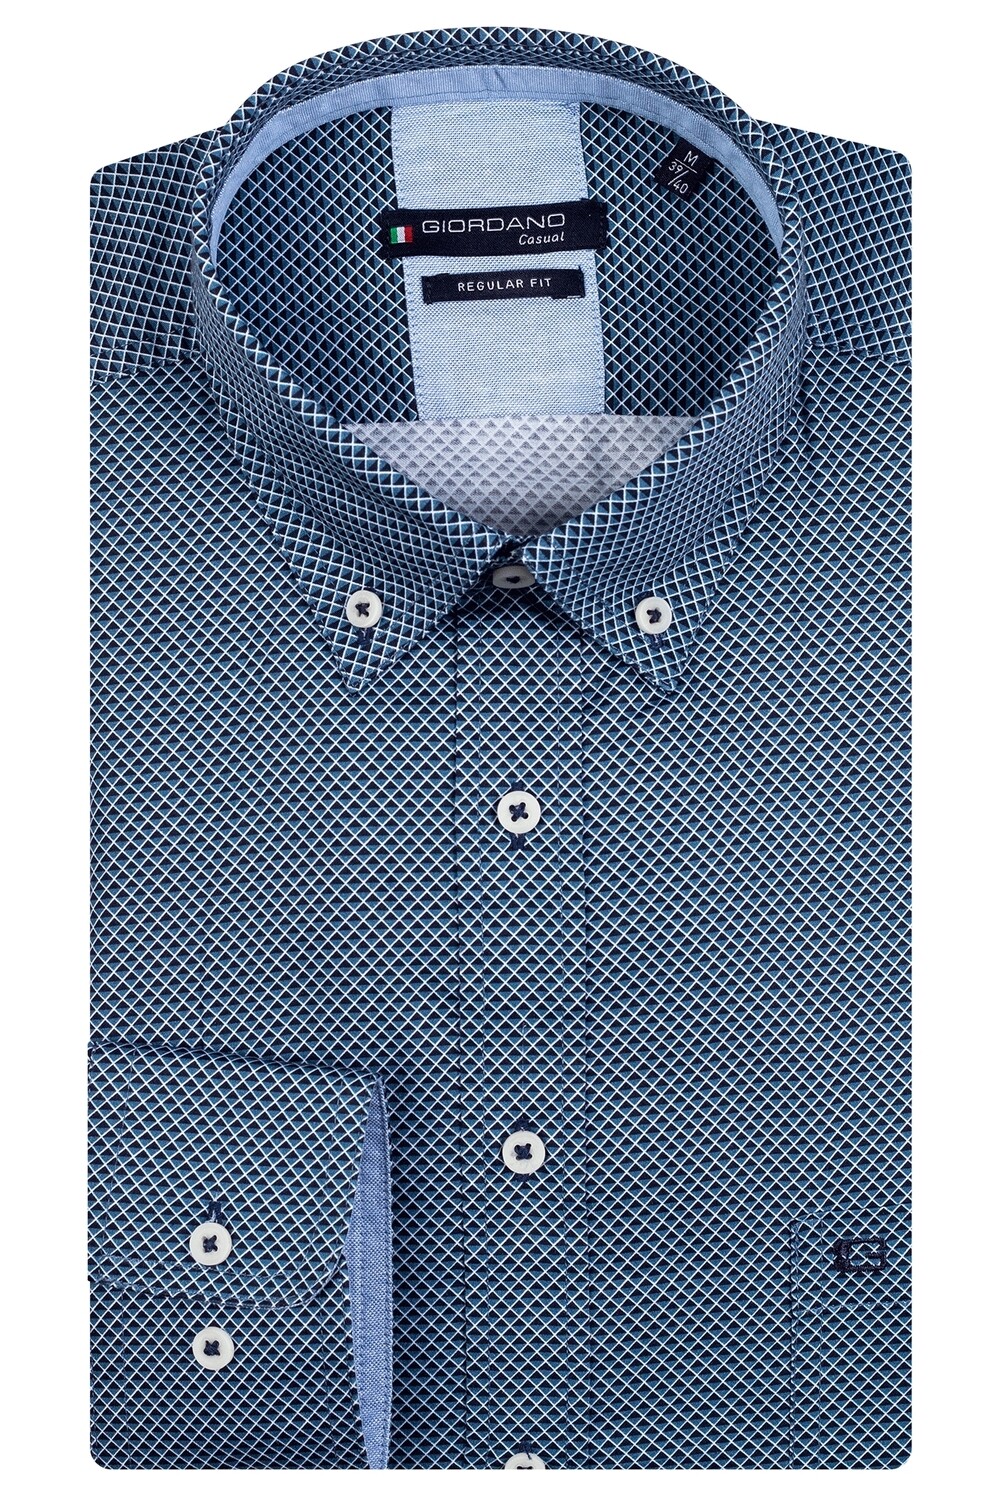 Giordano shirt print diagonaal blauw